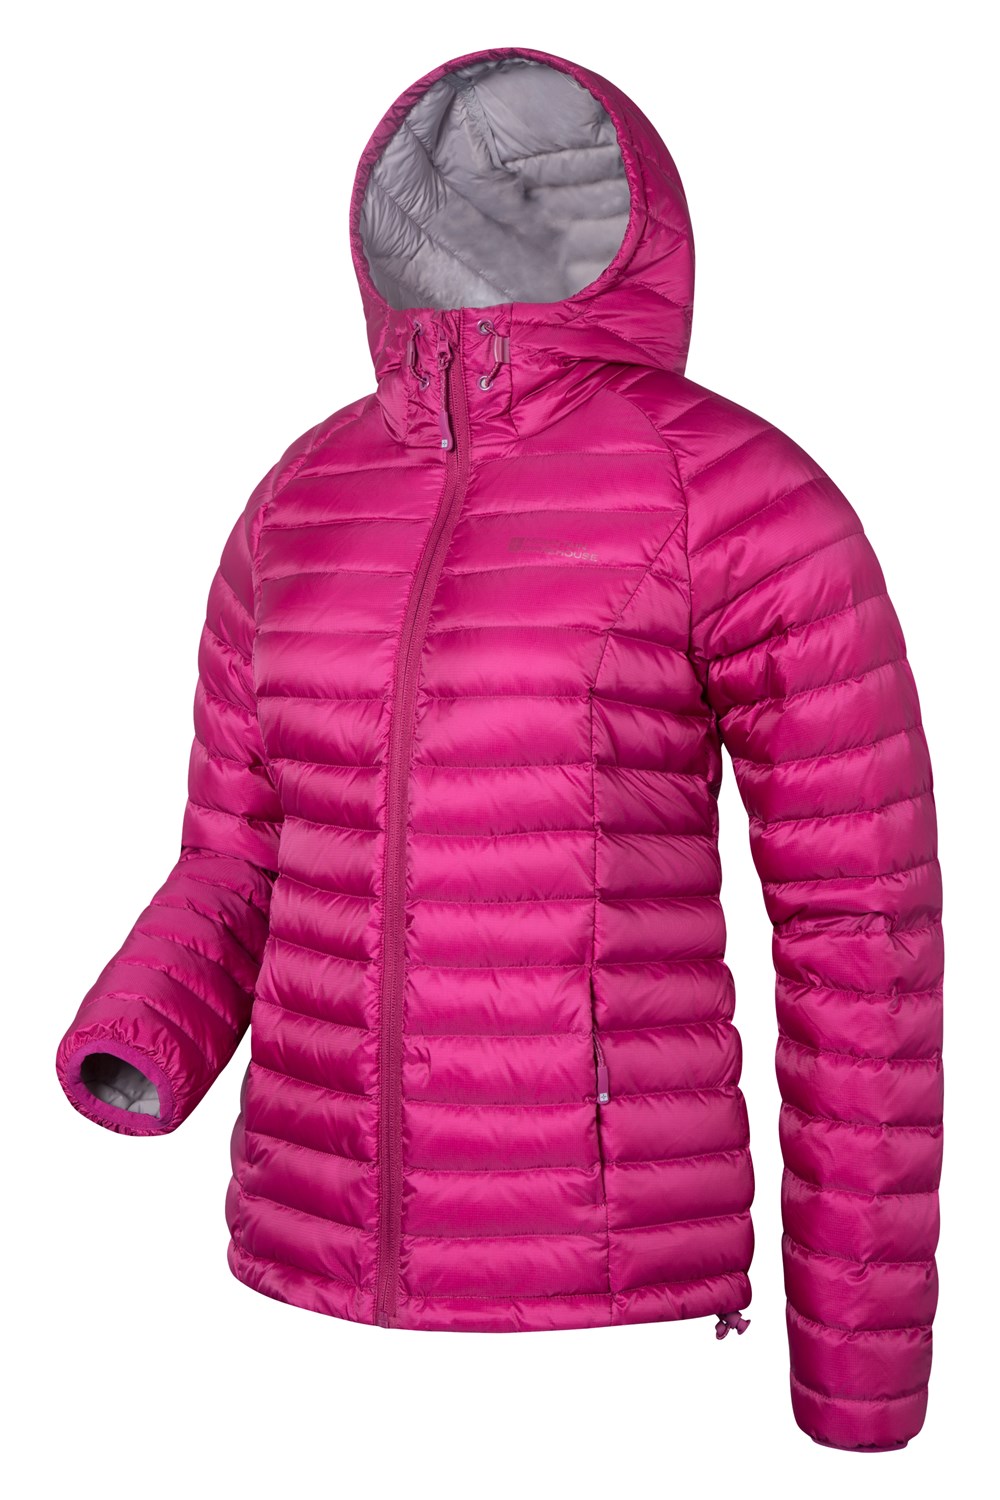 Mountain Warehouse Horizon Womens Hydrophobic Down Jacket | eBay